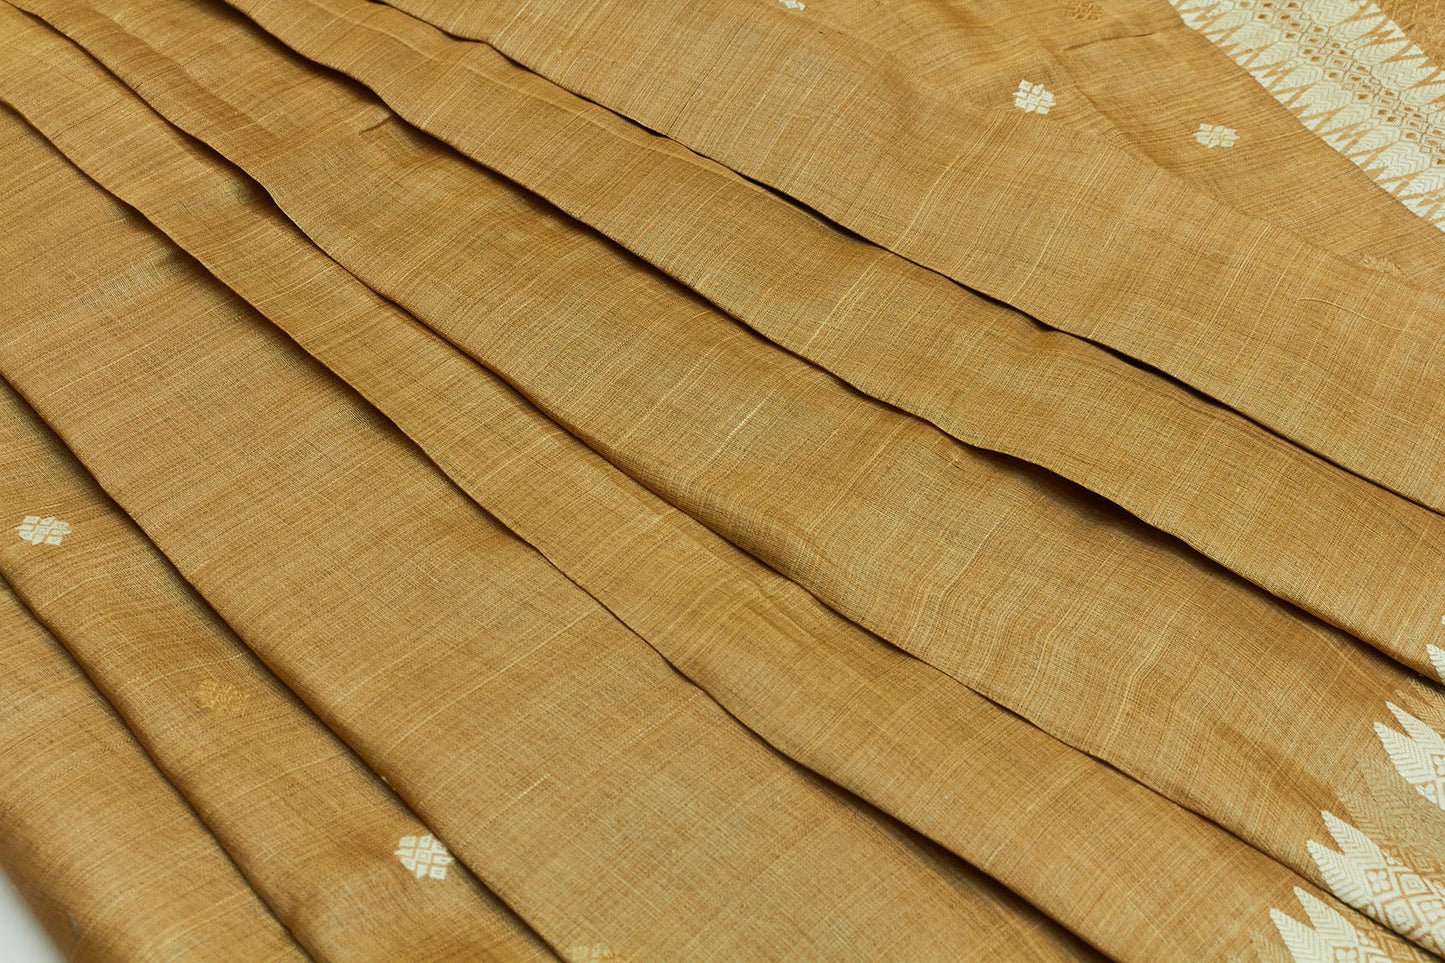 Sari en soie Golden Assam Muga Handloom avec bordure tissée (fait sur commande)